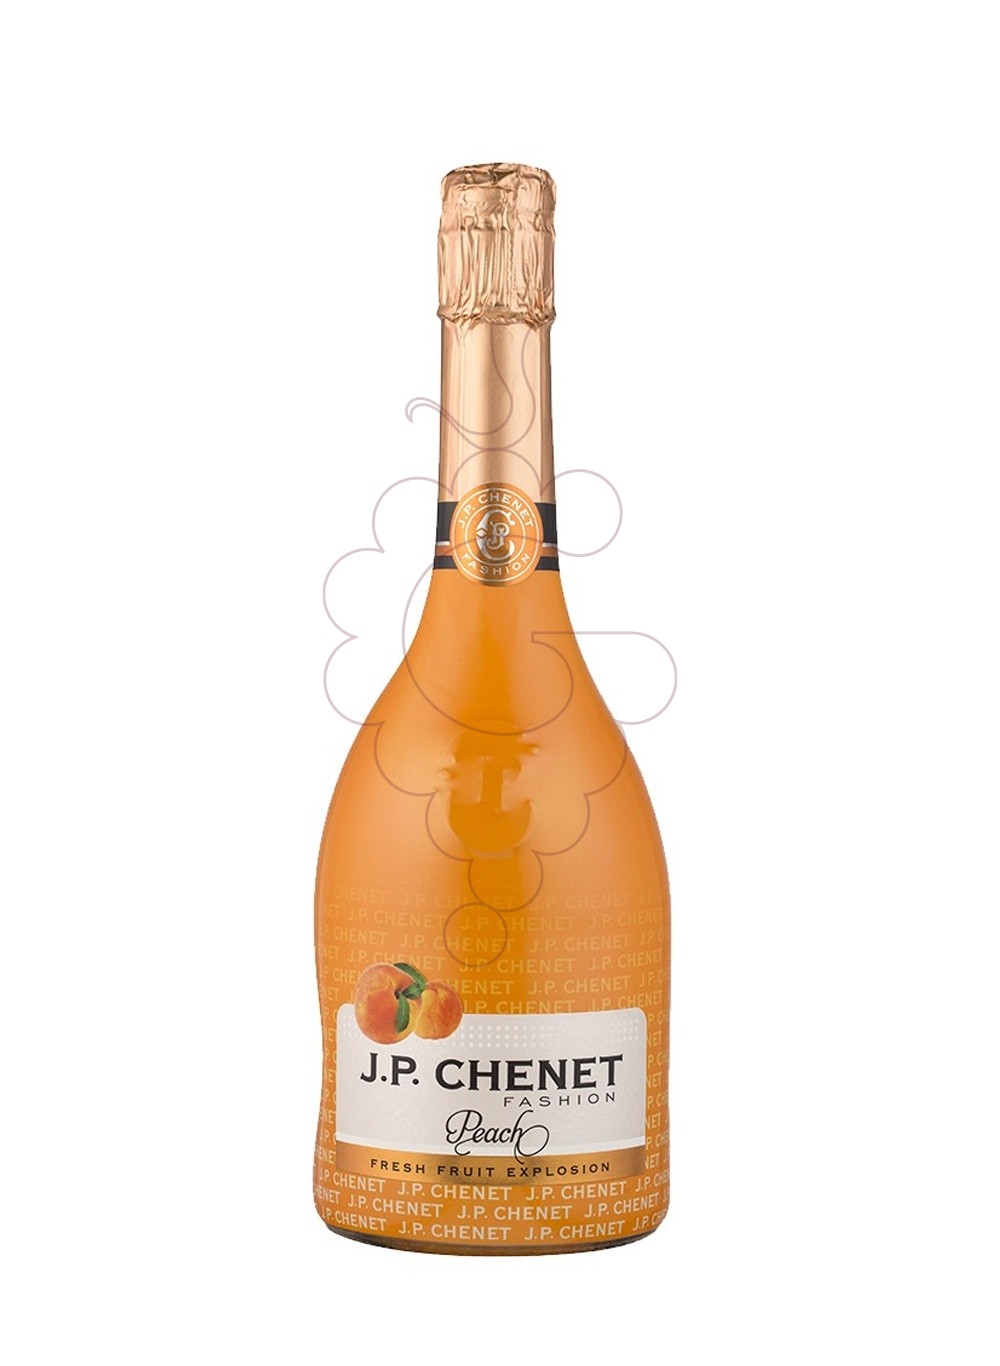 Photo Aperitif wine JP Chenet Fashion Peach